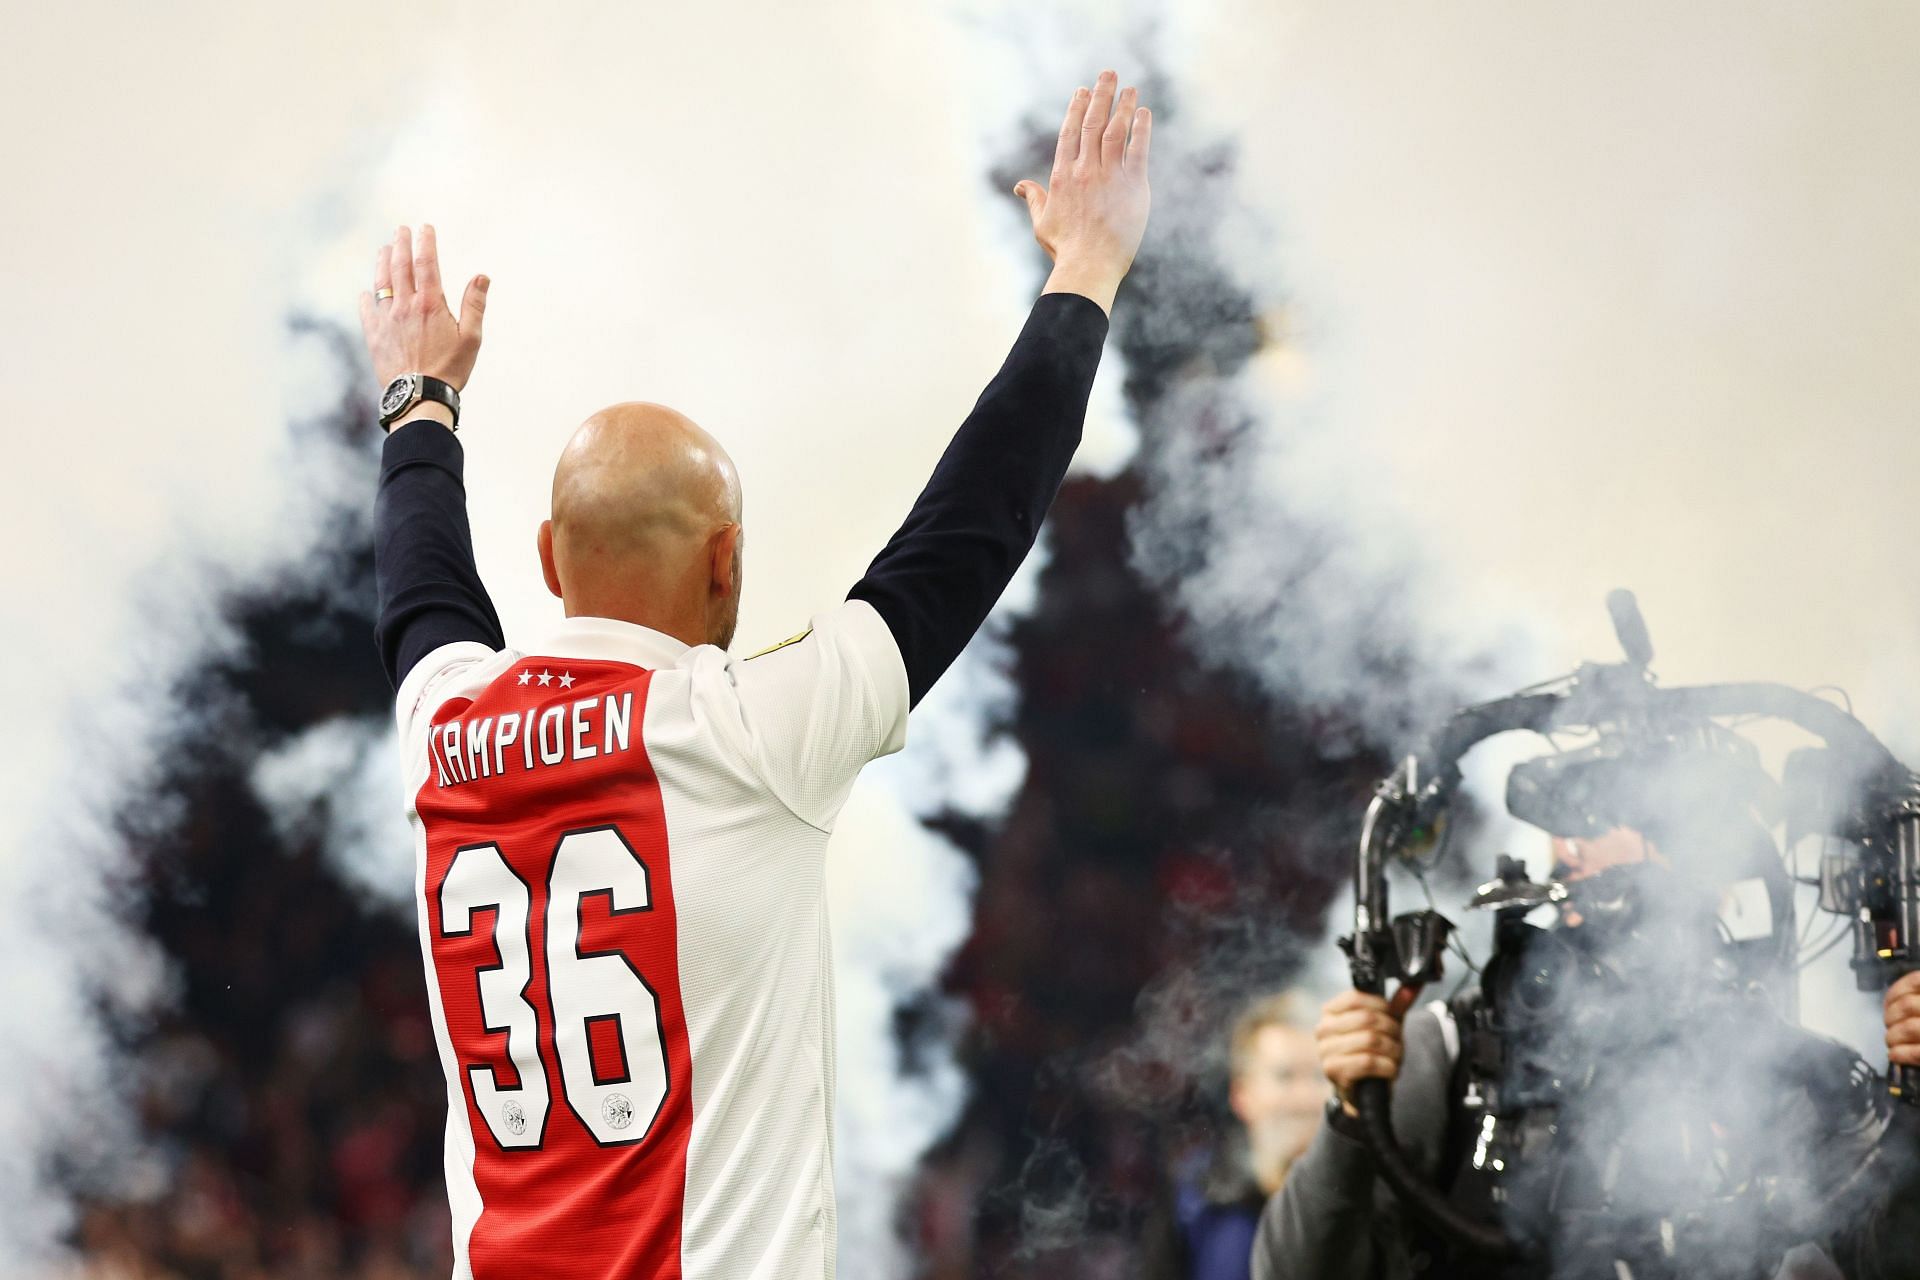 Erik ten Hag won the Eredivisie title in his last season at Ajax.